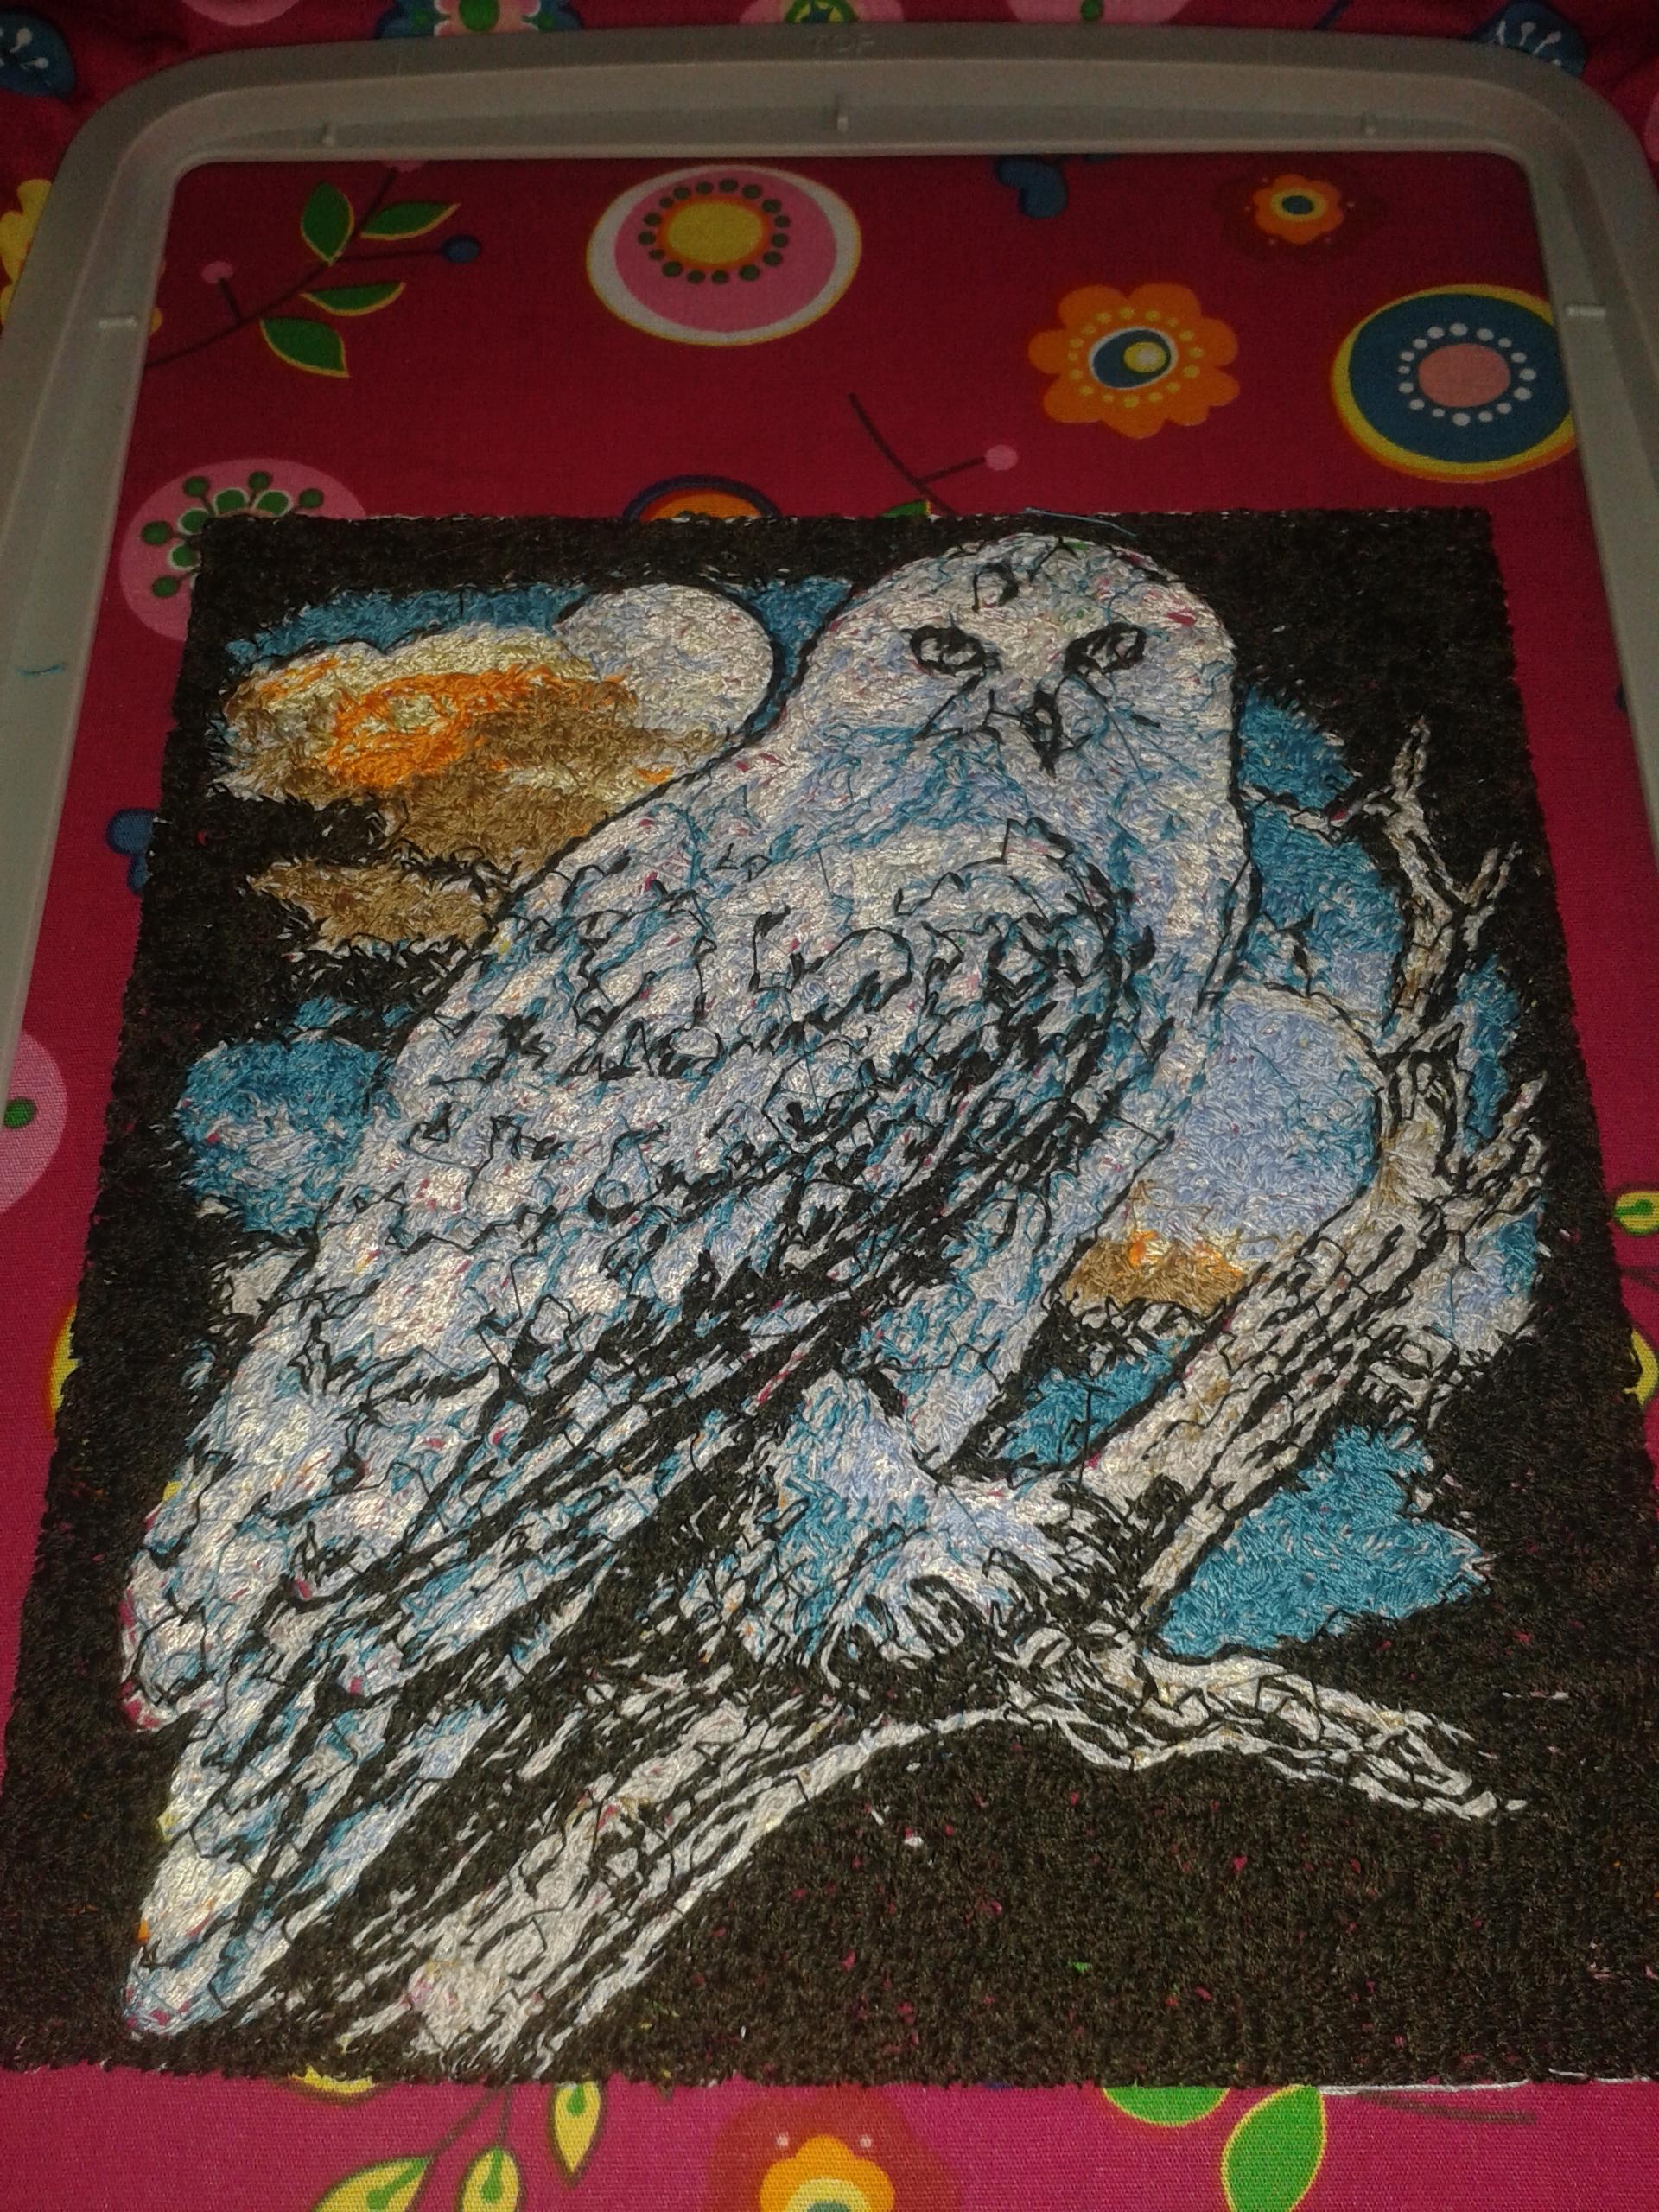 Polar owl embroidery design